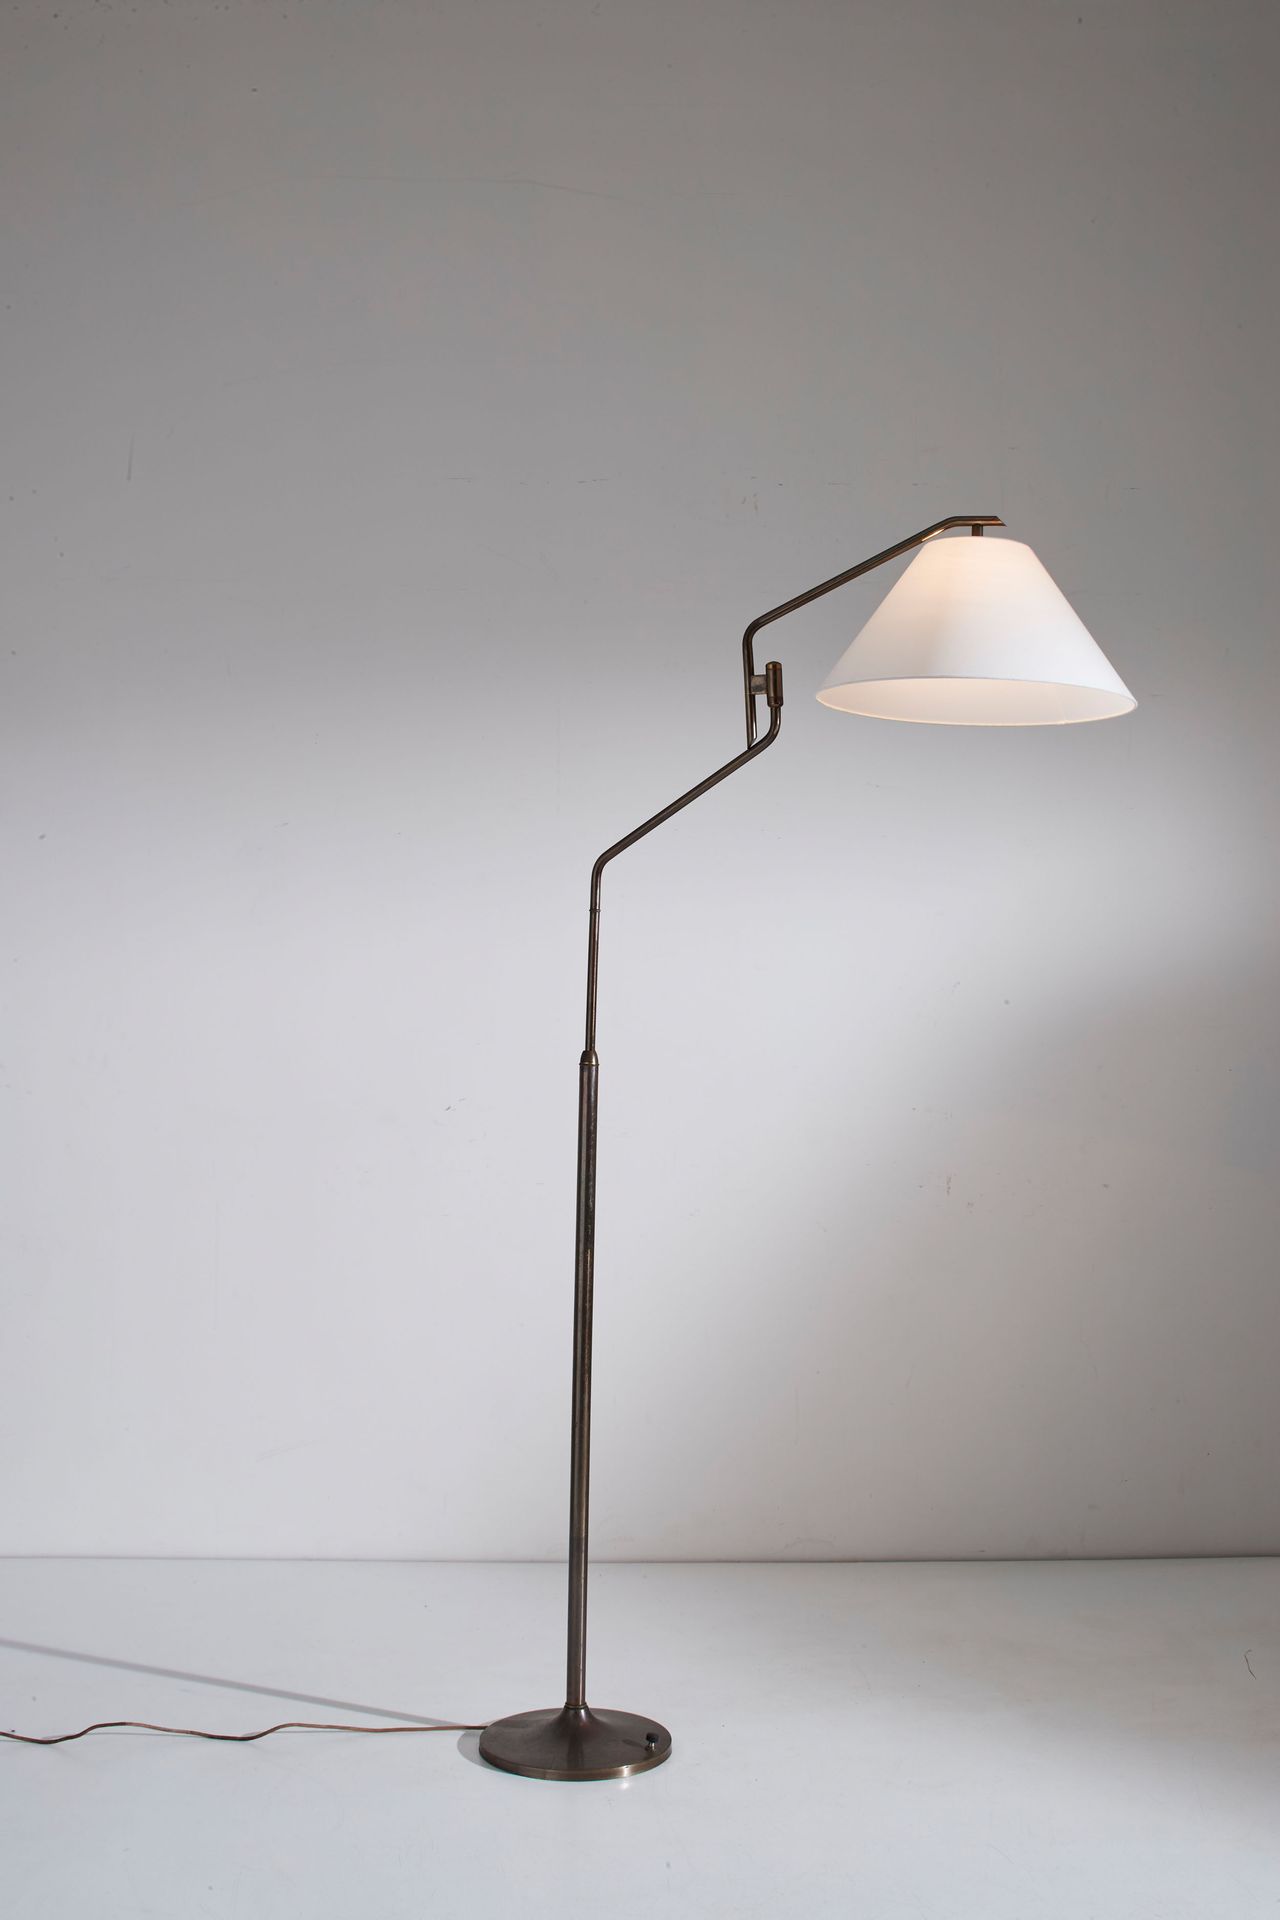 Manifattura Italiana Floor lamp mod. Bridge. Brass, fabric. Italy 1950s.
Cm 197x&hellip;